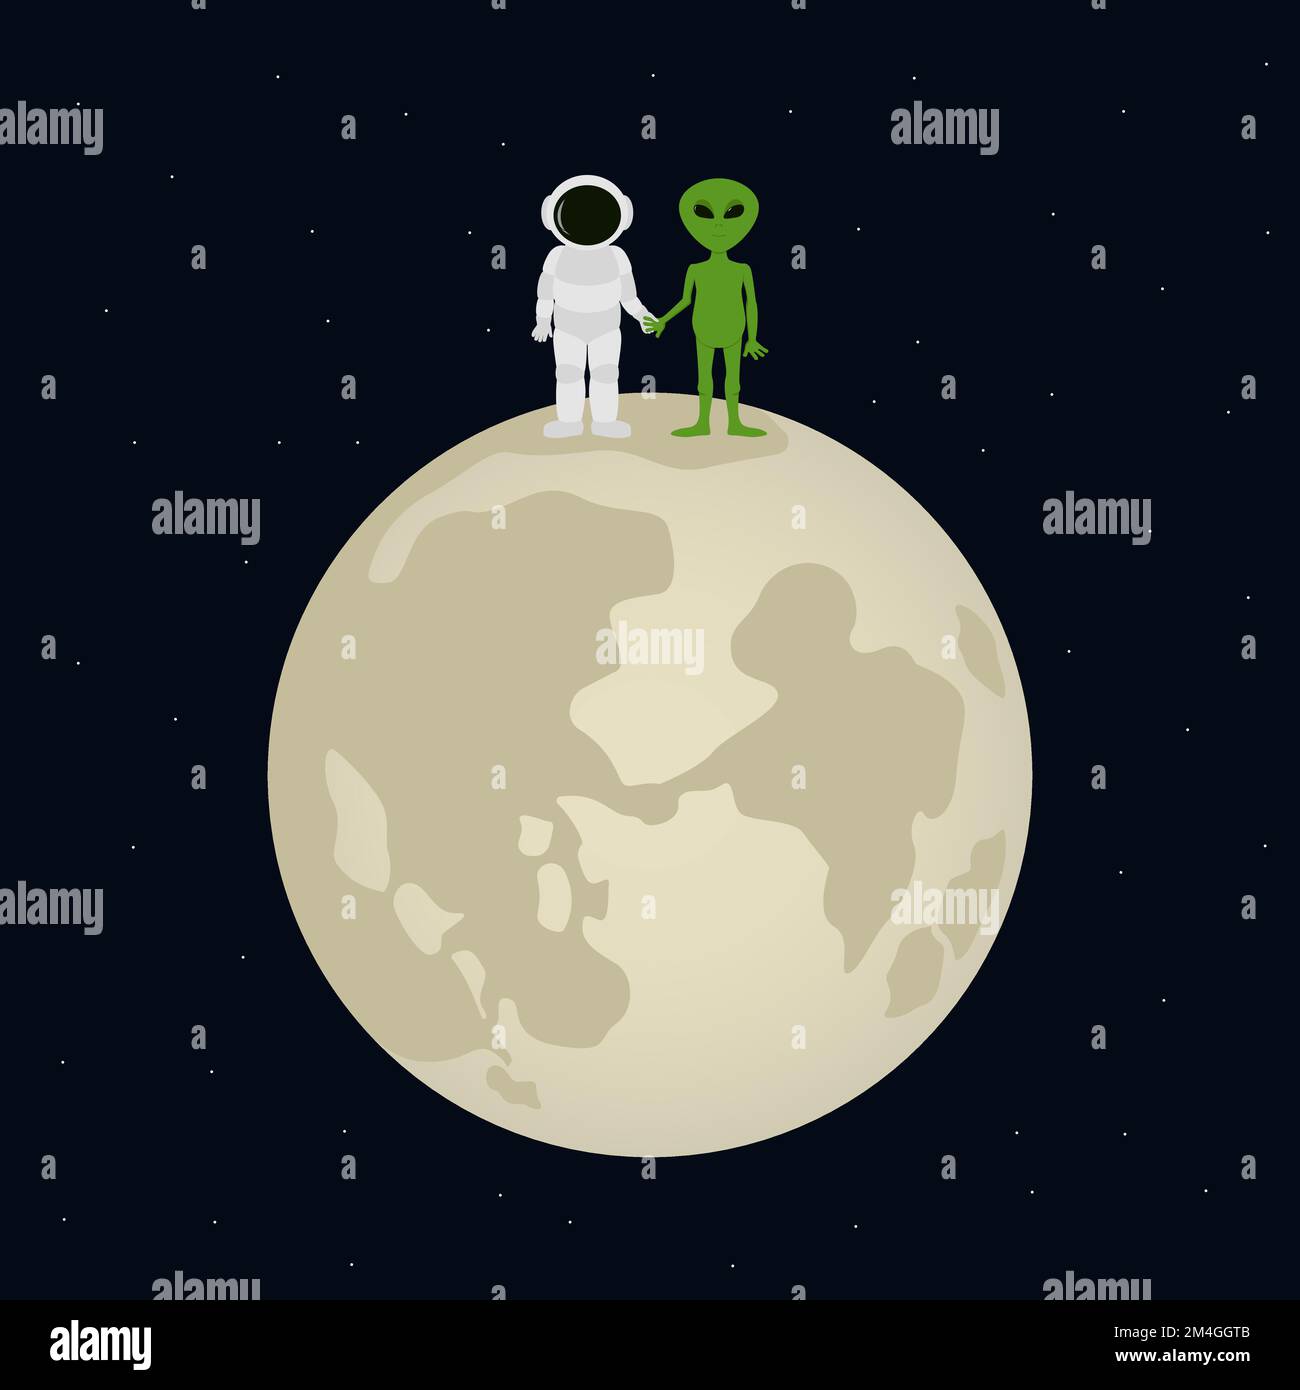 Meeting of astronaut and alien on moon. Vector illustration. Stock Vector